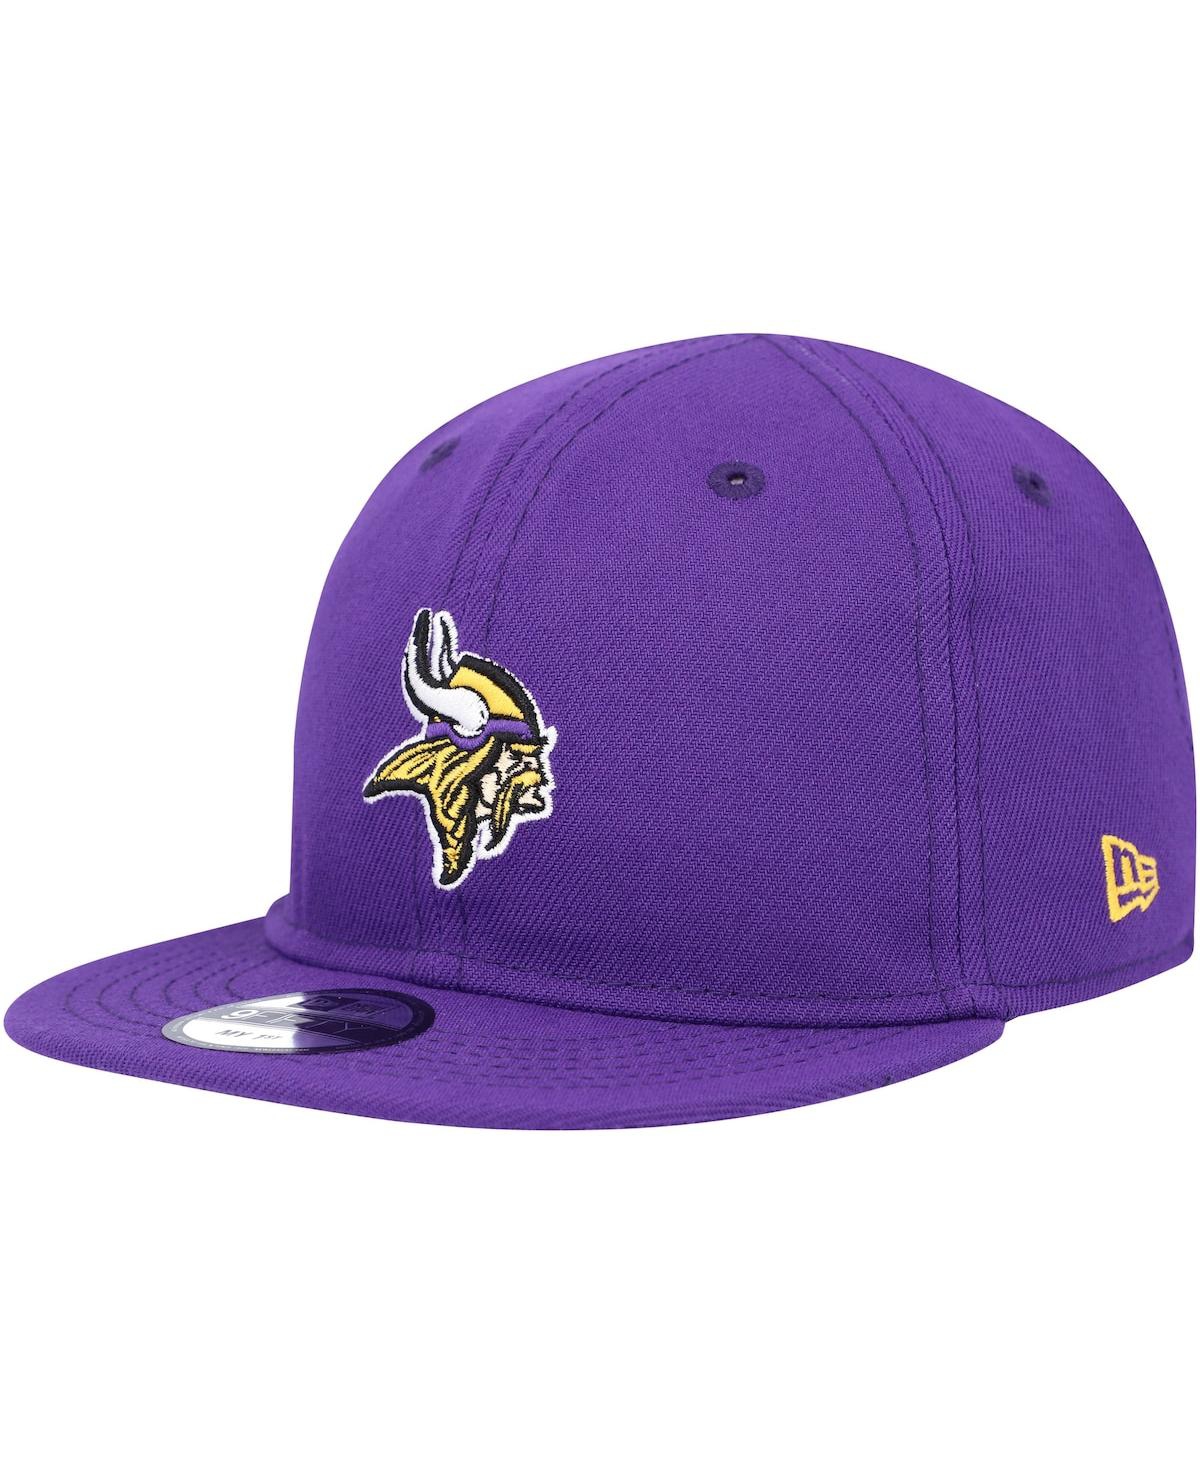 New Era Babies' Infant Boys And Girls  Purple Minnesota Vikings My 1st 9fifty Snapback Hat